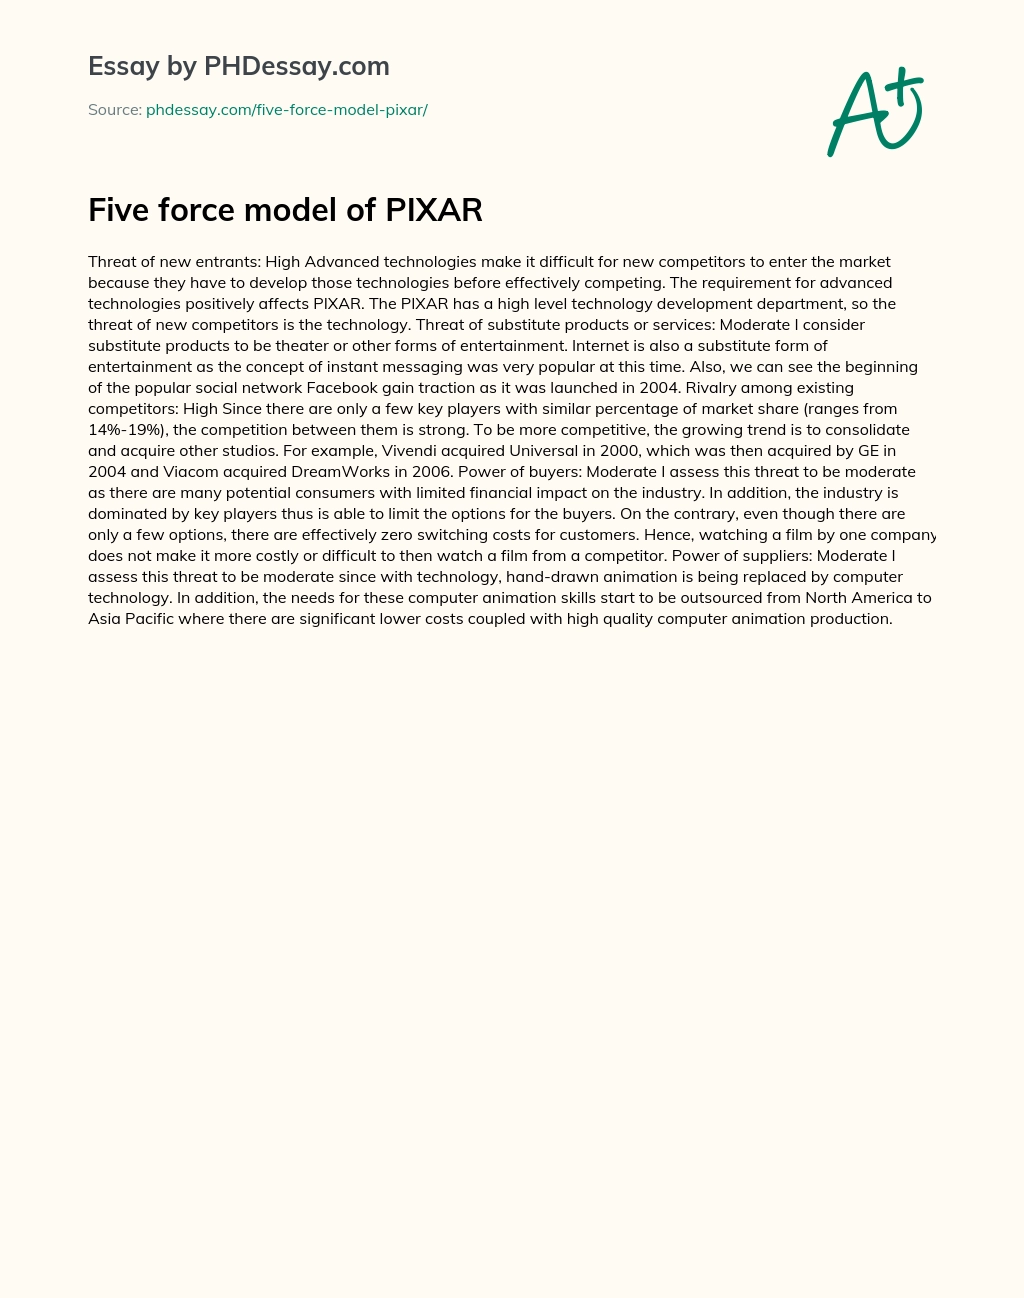 Five force model of PIXAR essay